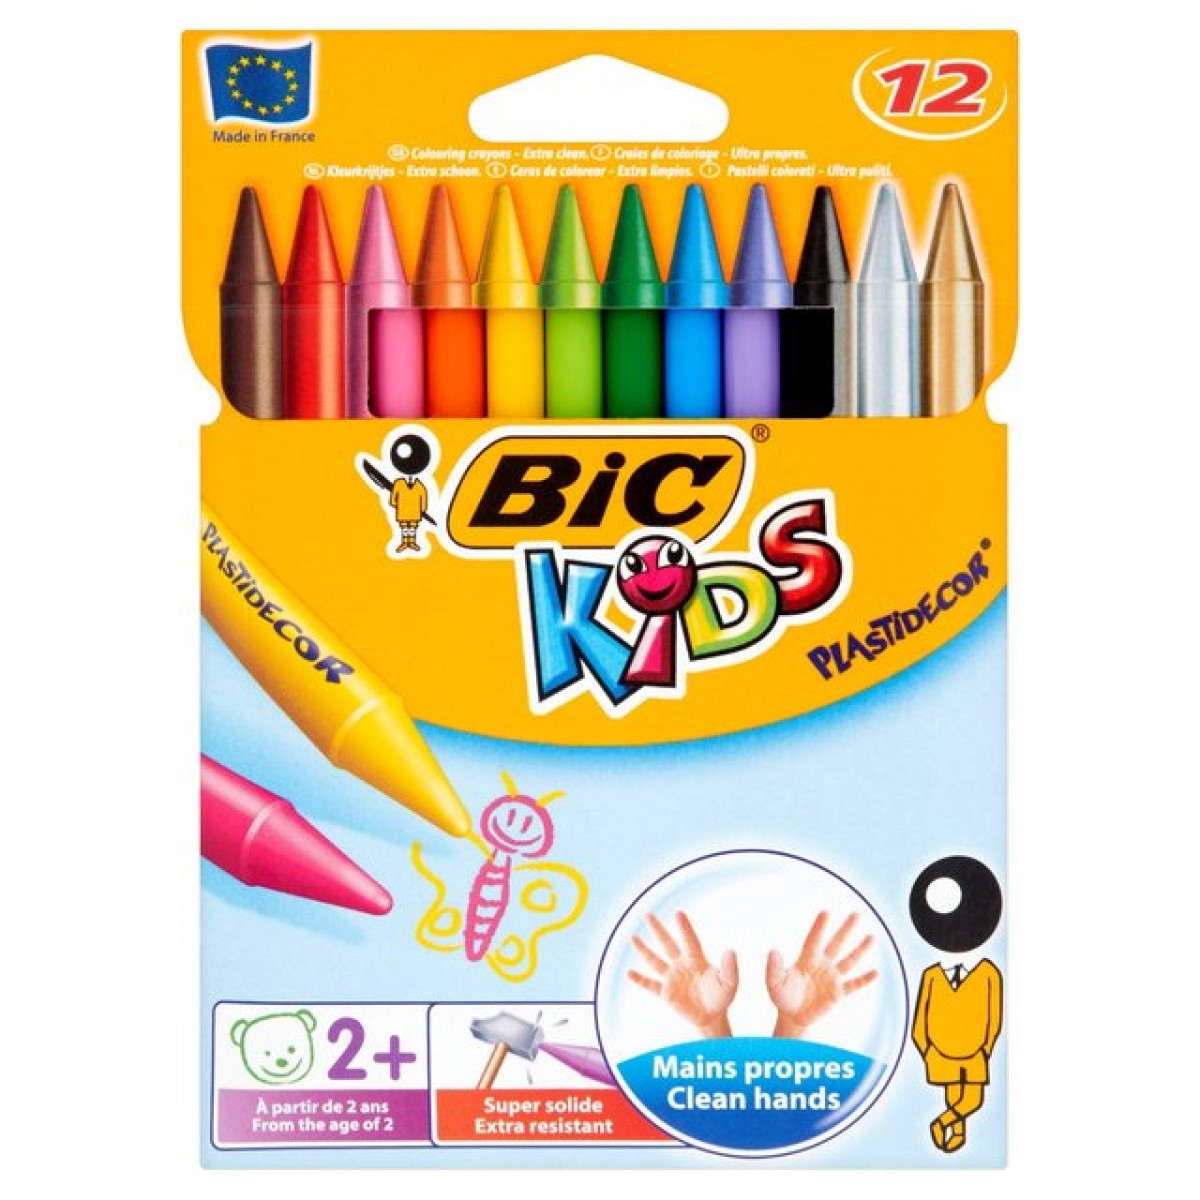 Bic crayons